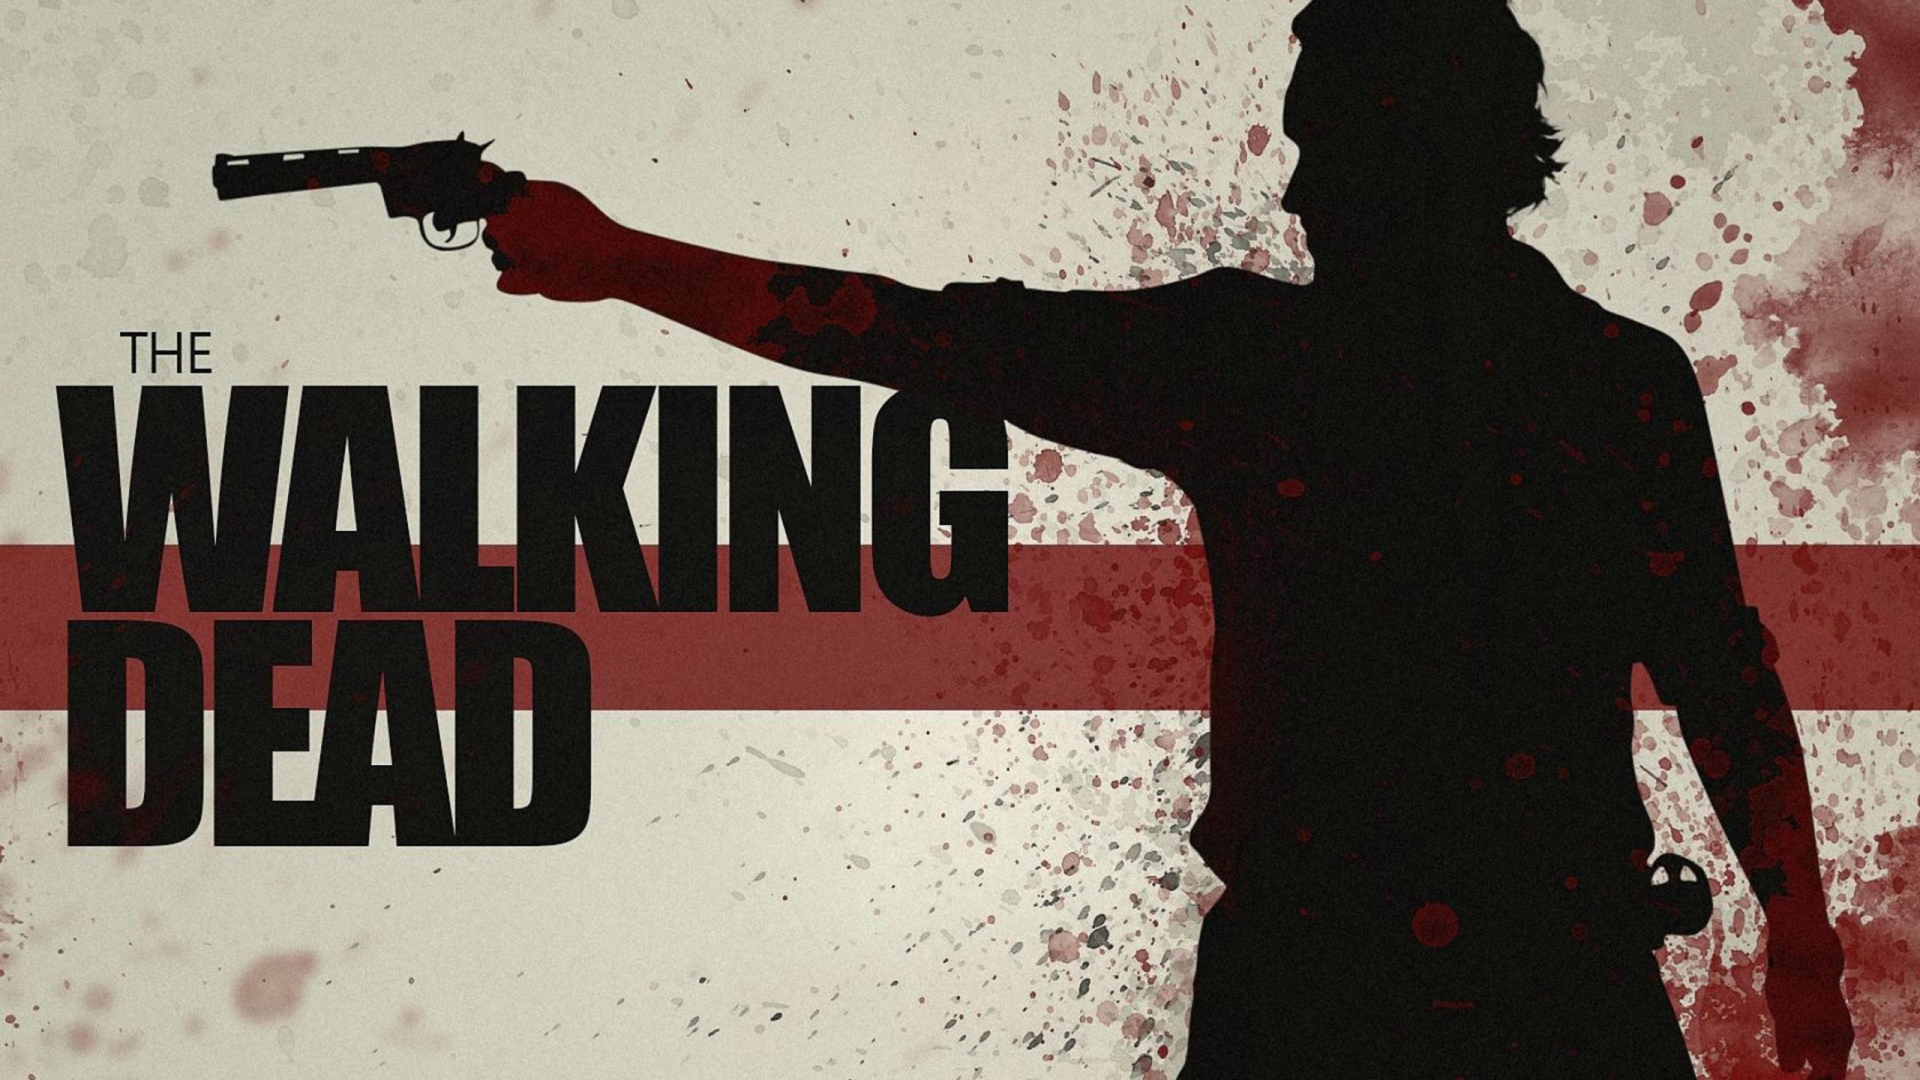 The Walking Dead Gun Poster for 1920 x 1080 HDTV 1080p resolution